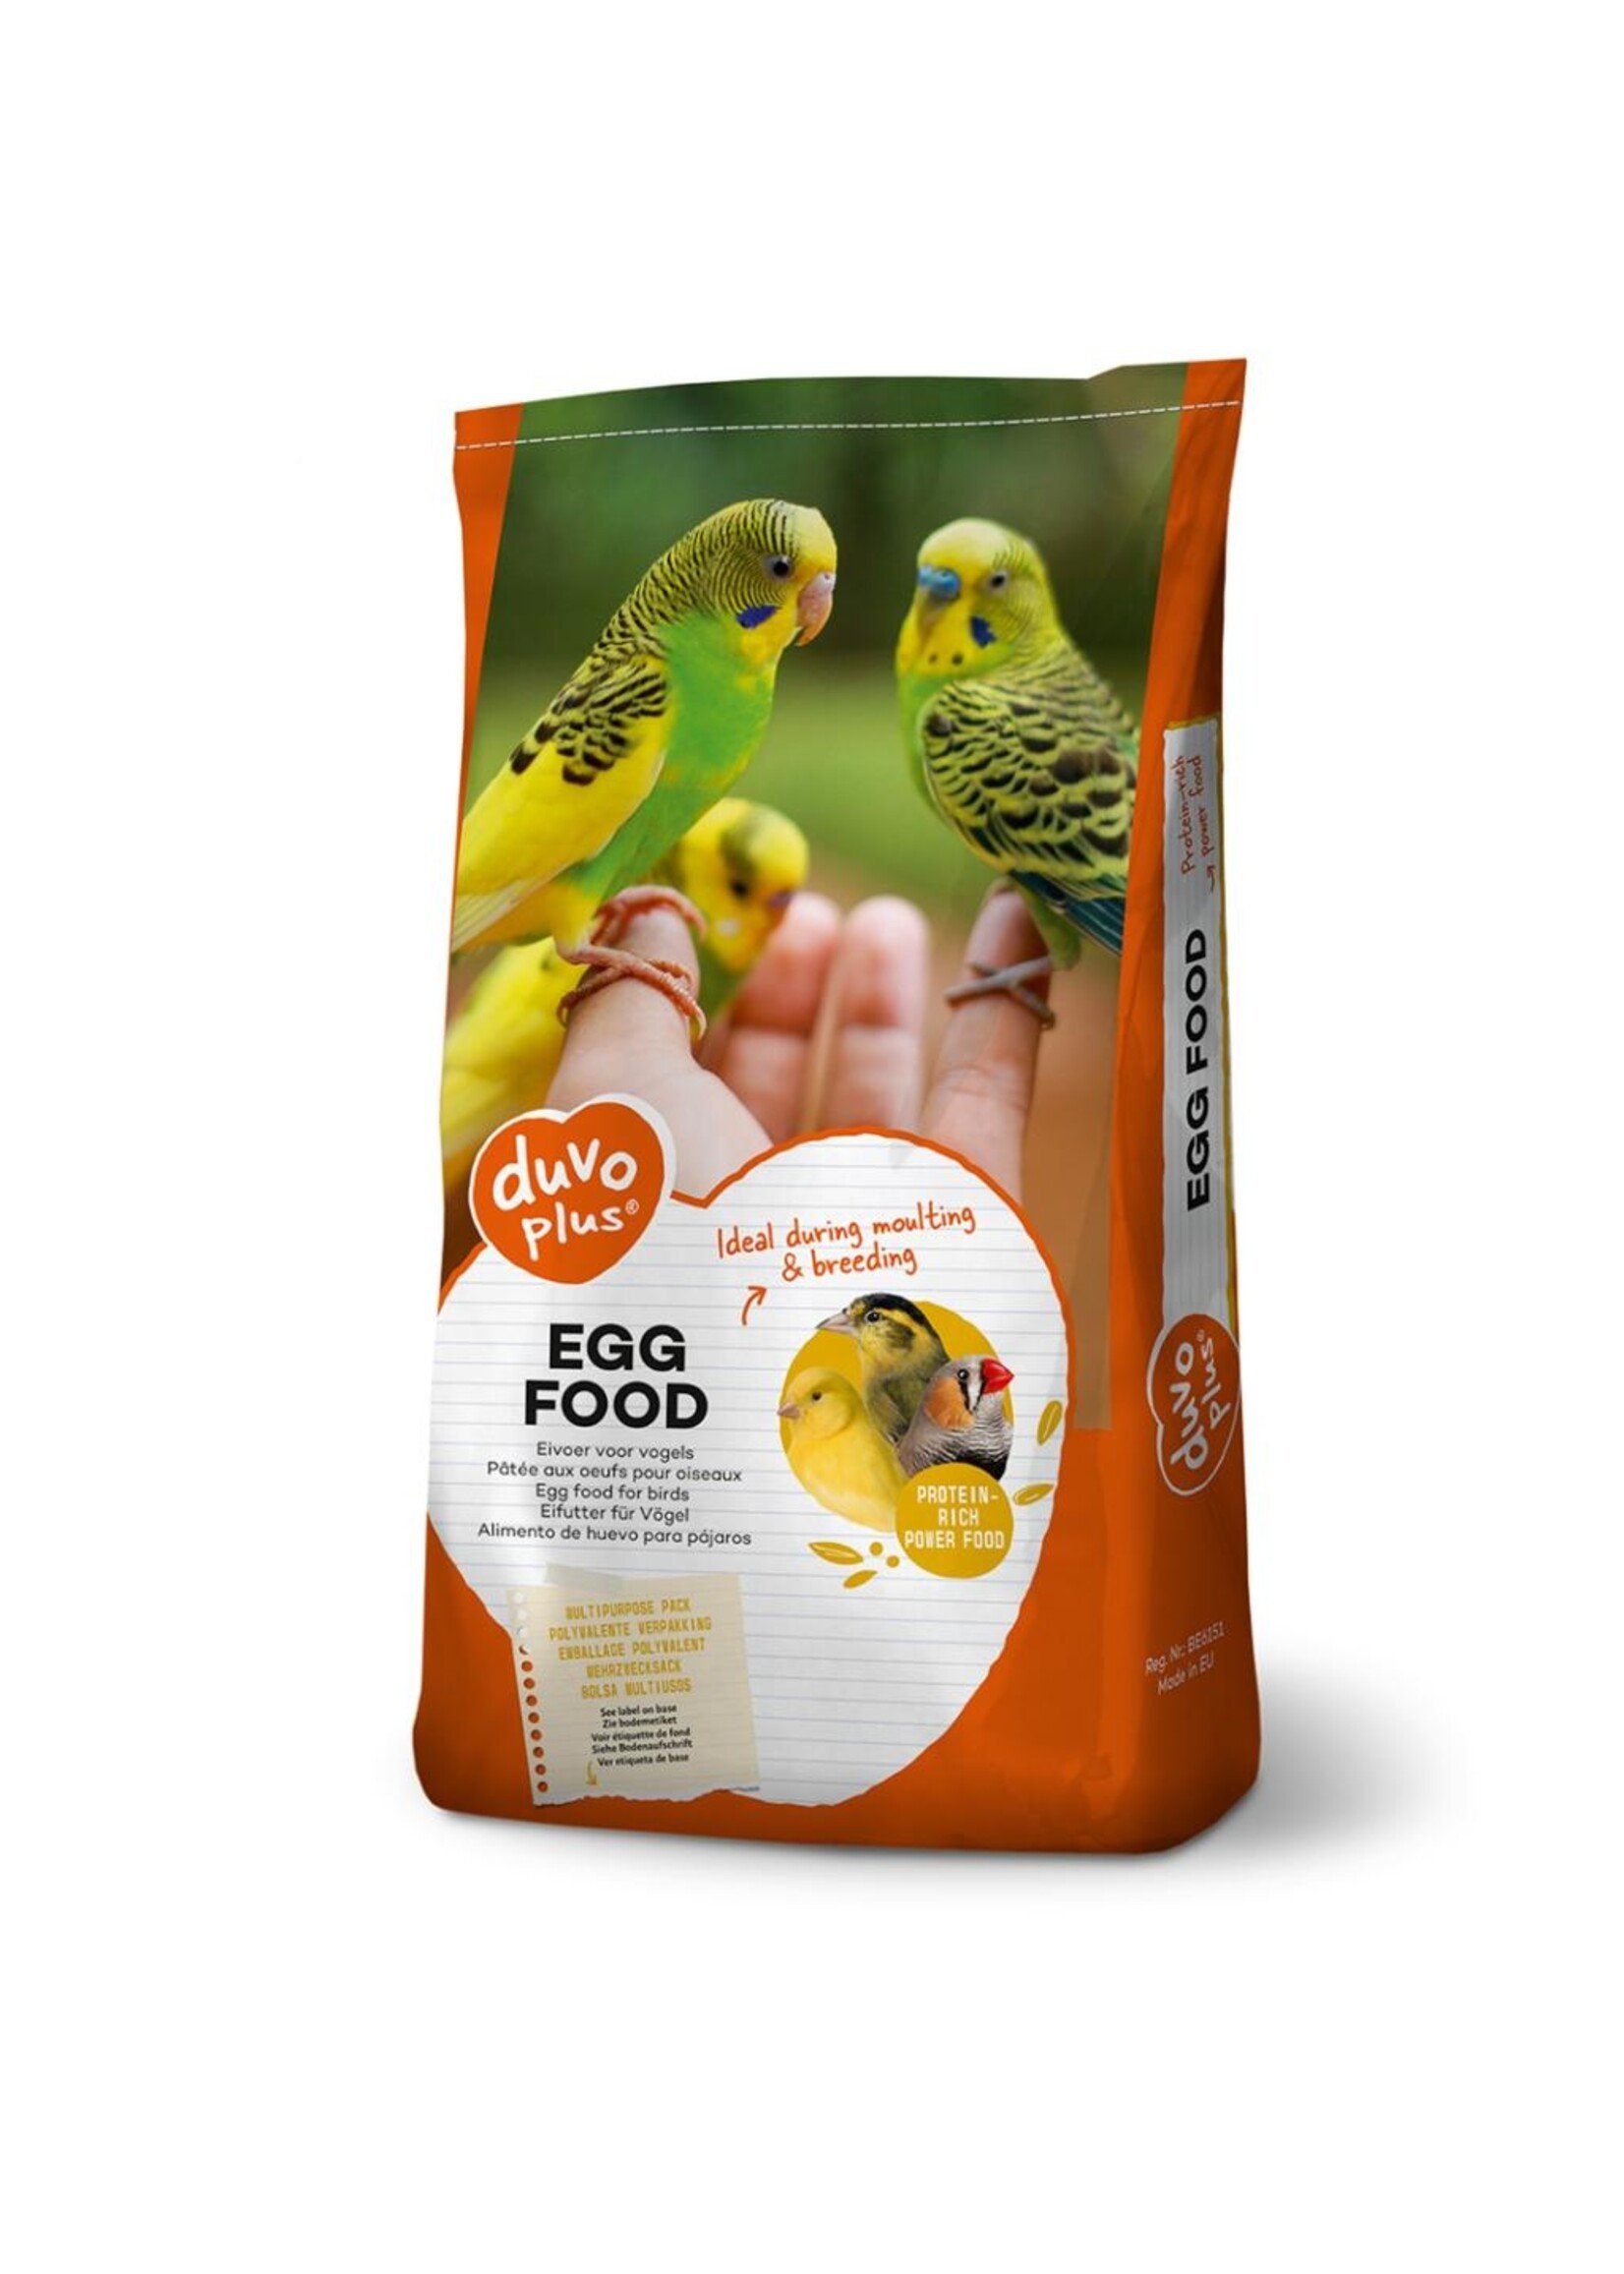 Duvo Duvo Plus Yellow Egg Food 1lb